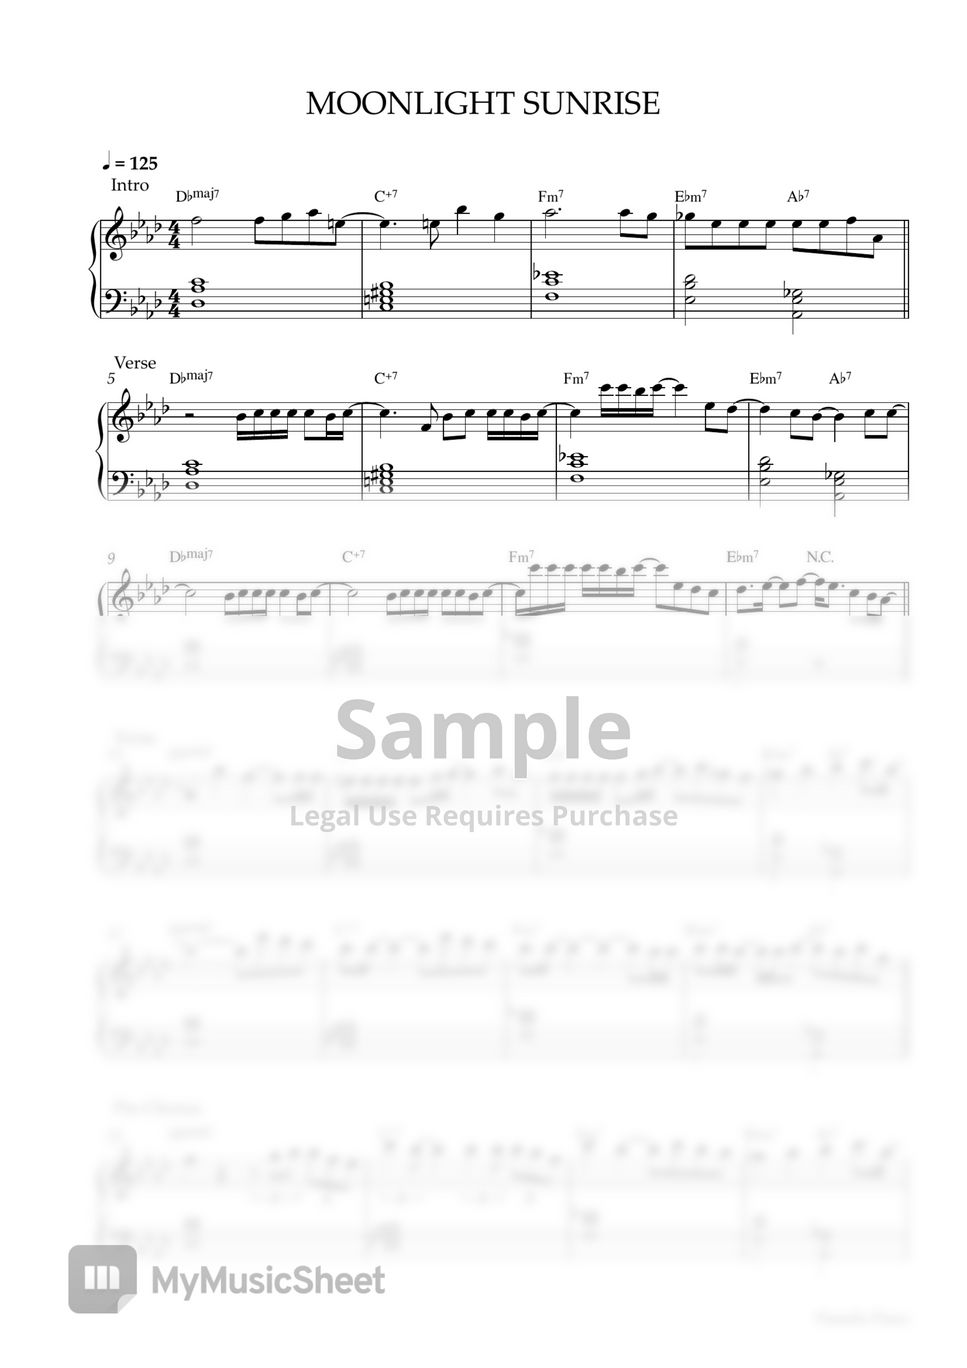 TWICE - MOONLIGHT SUNRISE (MEDIUM PIANO SHEET) by Pianella Piano